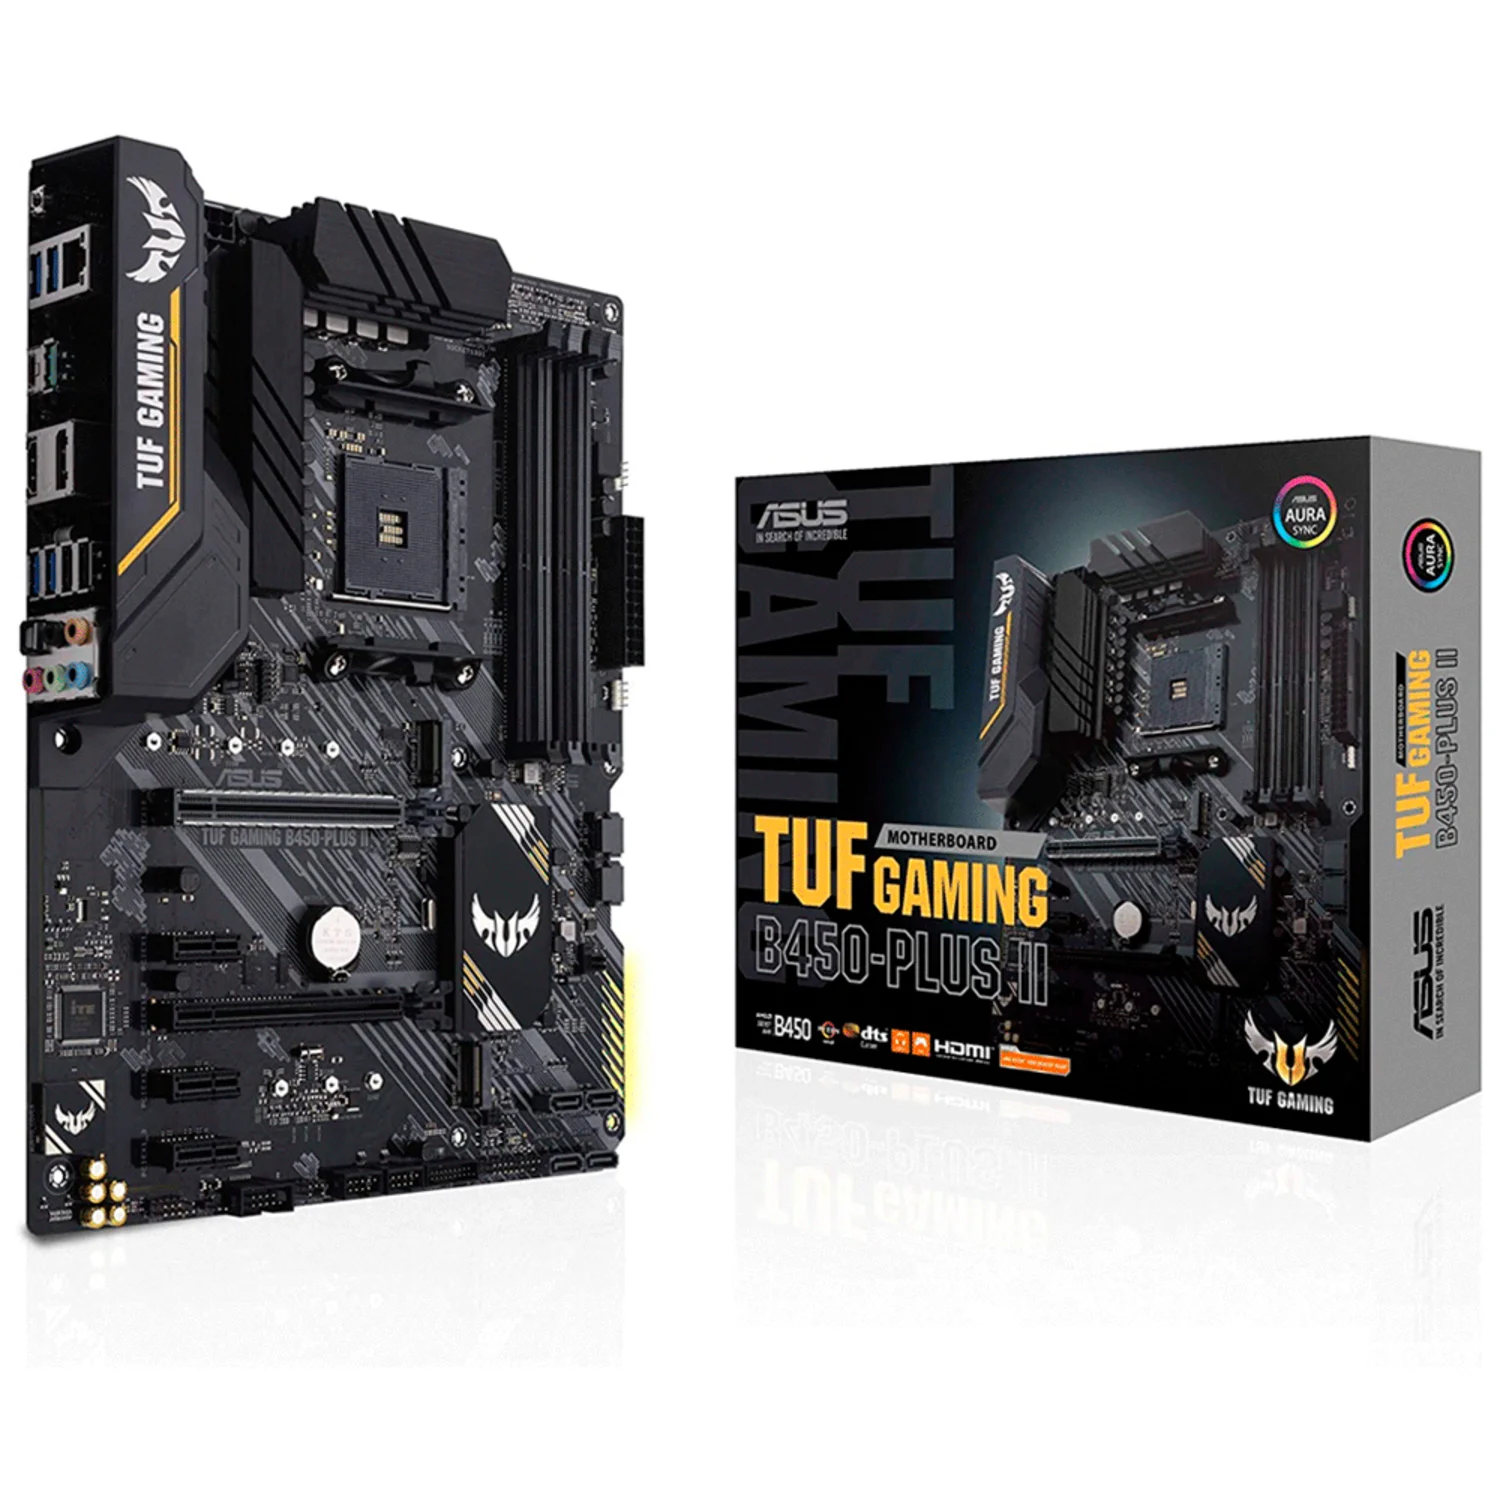 Placa Mãe Asus Tuf B450 Plus II Gaming Socket AM4 Chipset AMD B450 4XDDR4 ATX